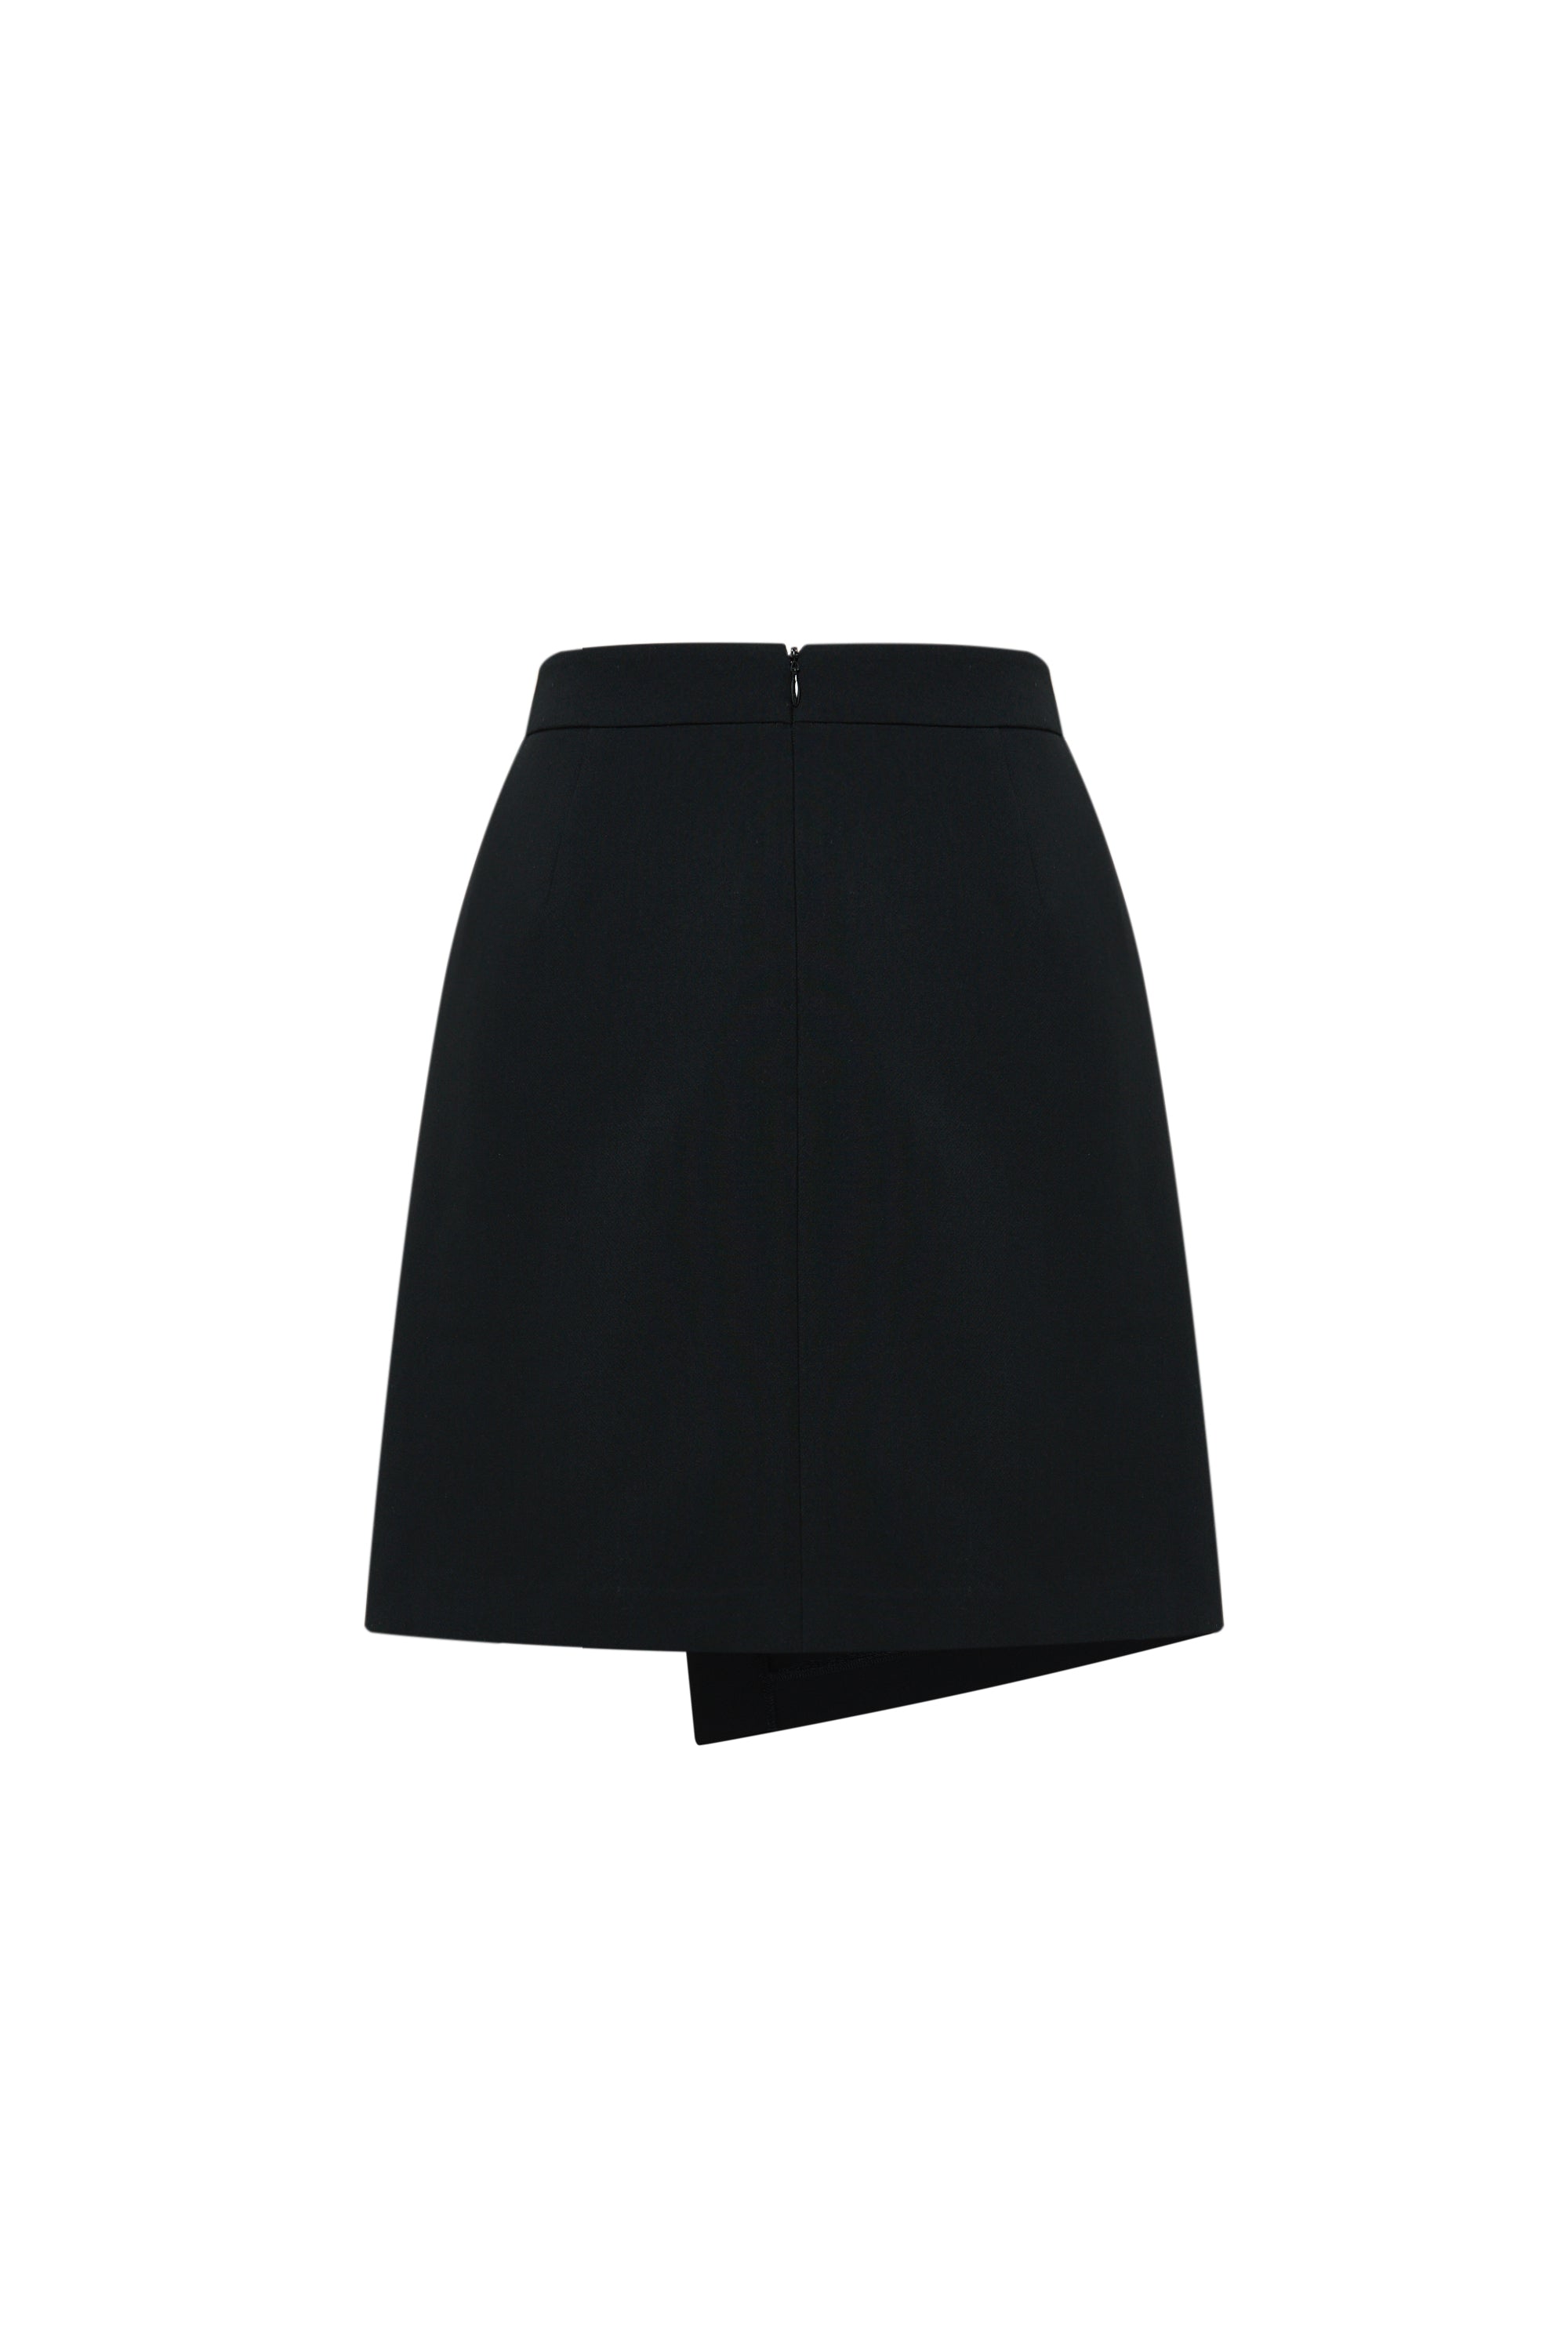 Alexa Soft Touch Stretchable Box Pleat Mini Skirt